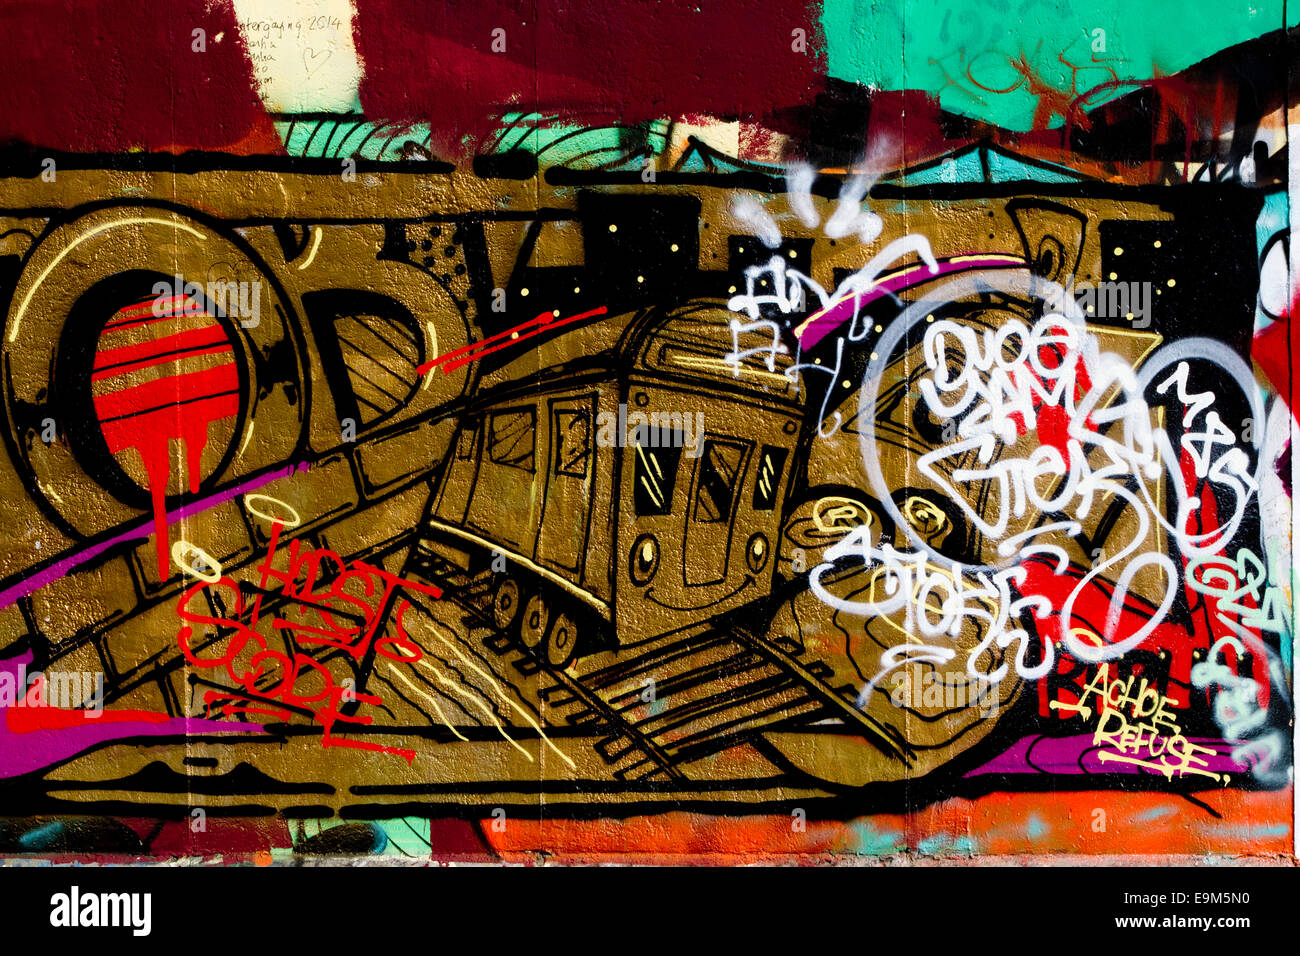 Graffiti street art Berlin Wall train tags colour Stock Photo